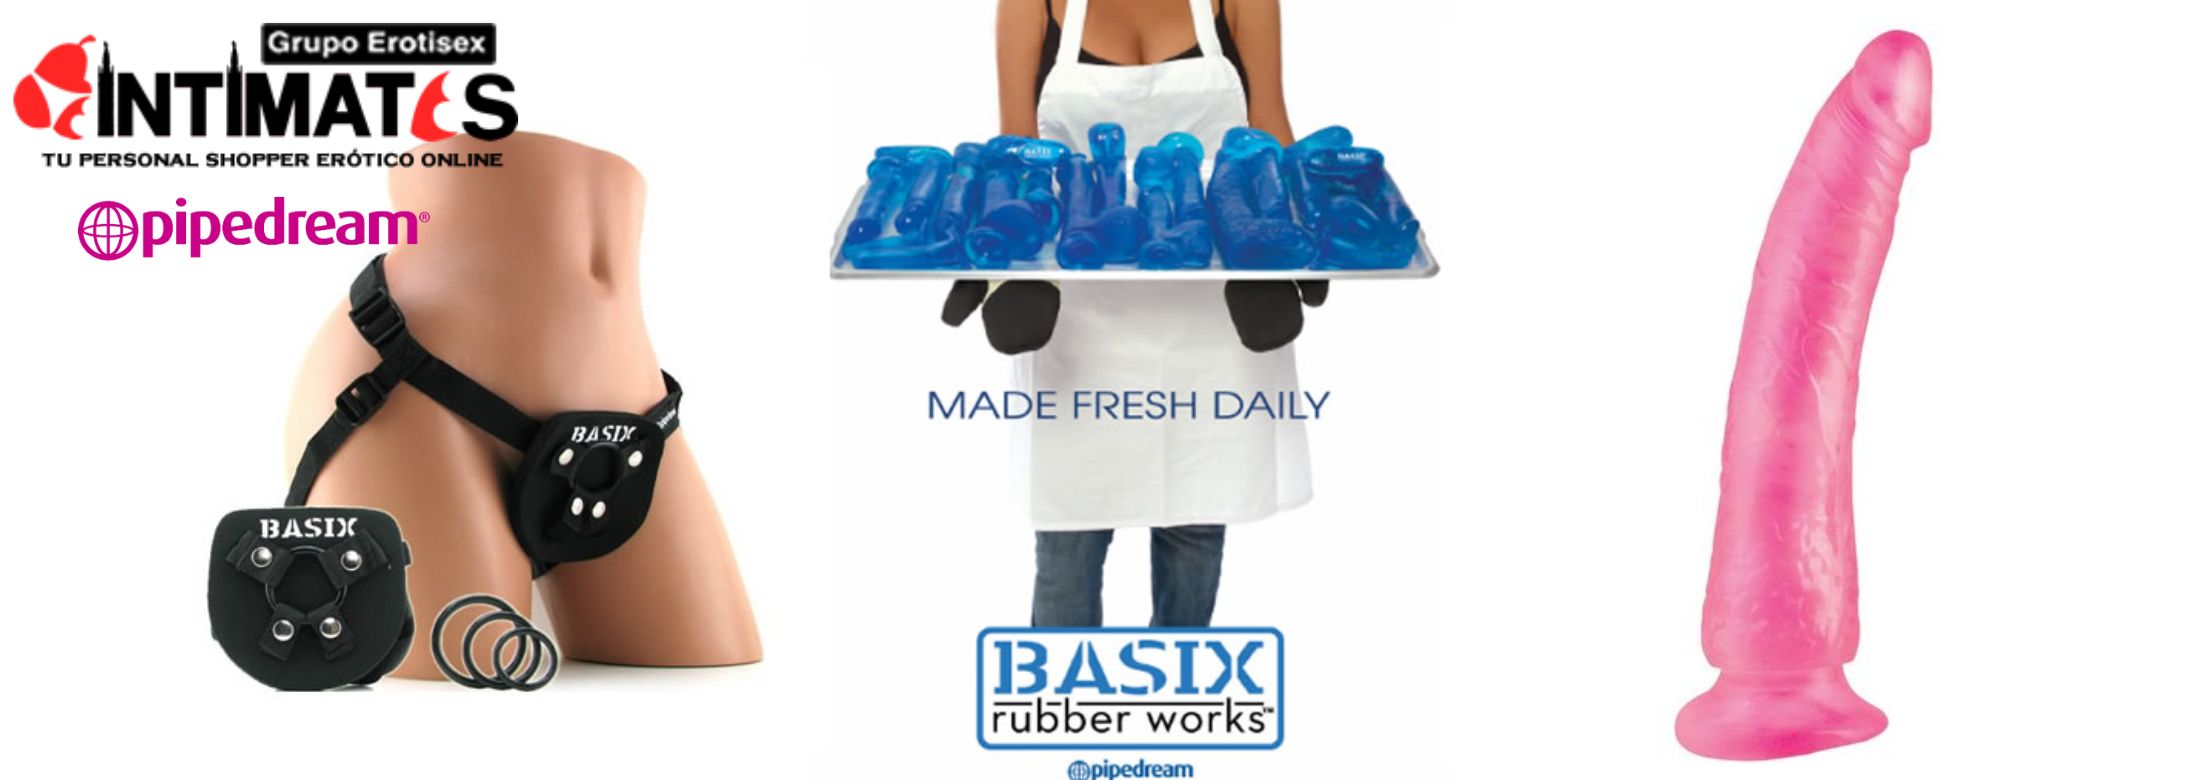 Basix rubber works de Pipedream, que puedes adquirir en intimates.es "Tu Personal Shopper Erótico Online"